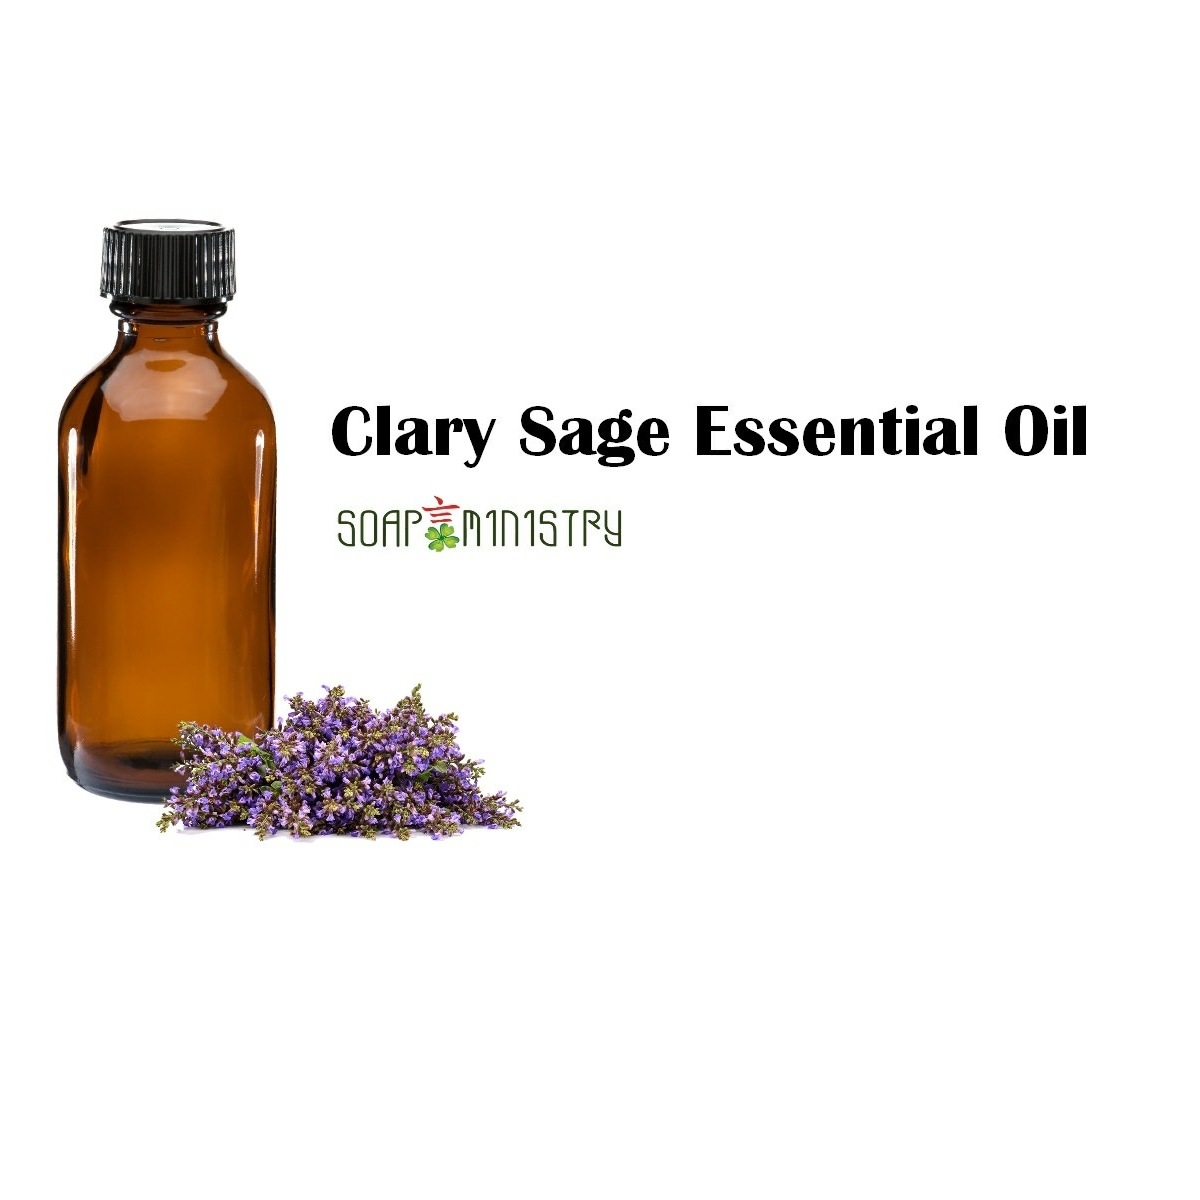 Clary sage Essential Oil 100ml